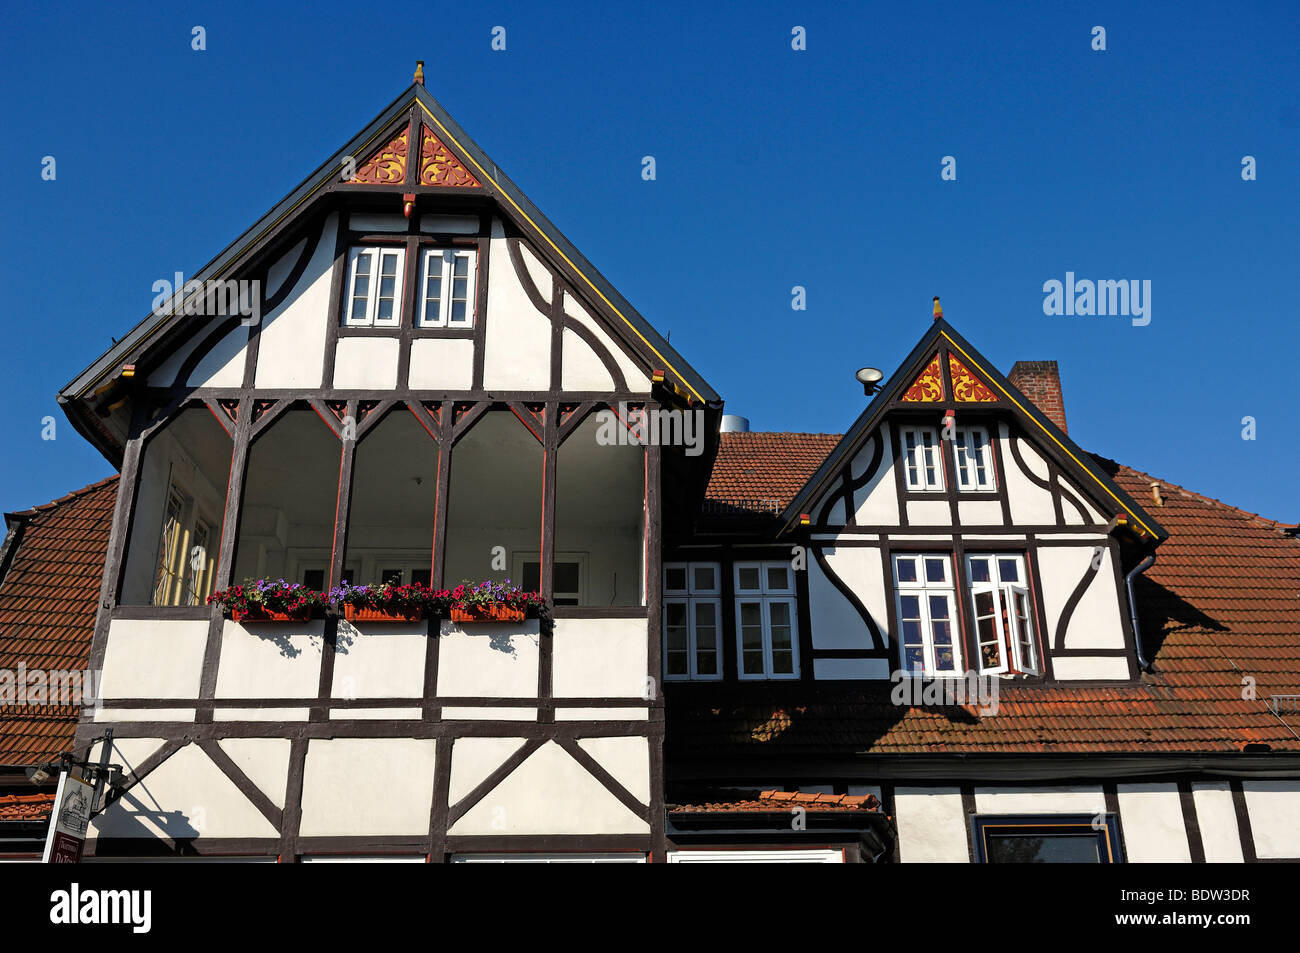 Old Lower Saxony half-timbered gable with veranda, Bad Essen, Lower Saxony, Germany, Europe Stock Photo